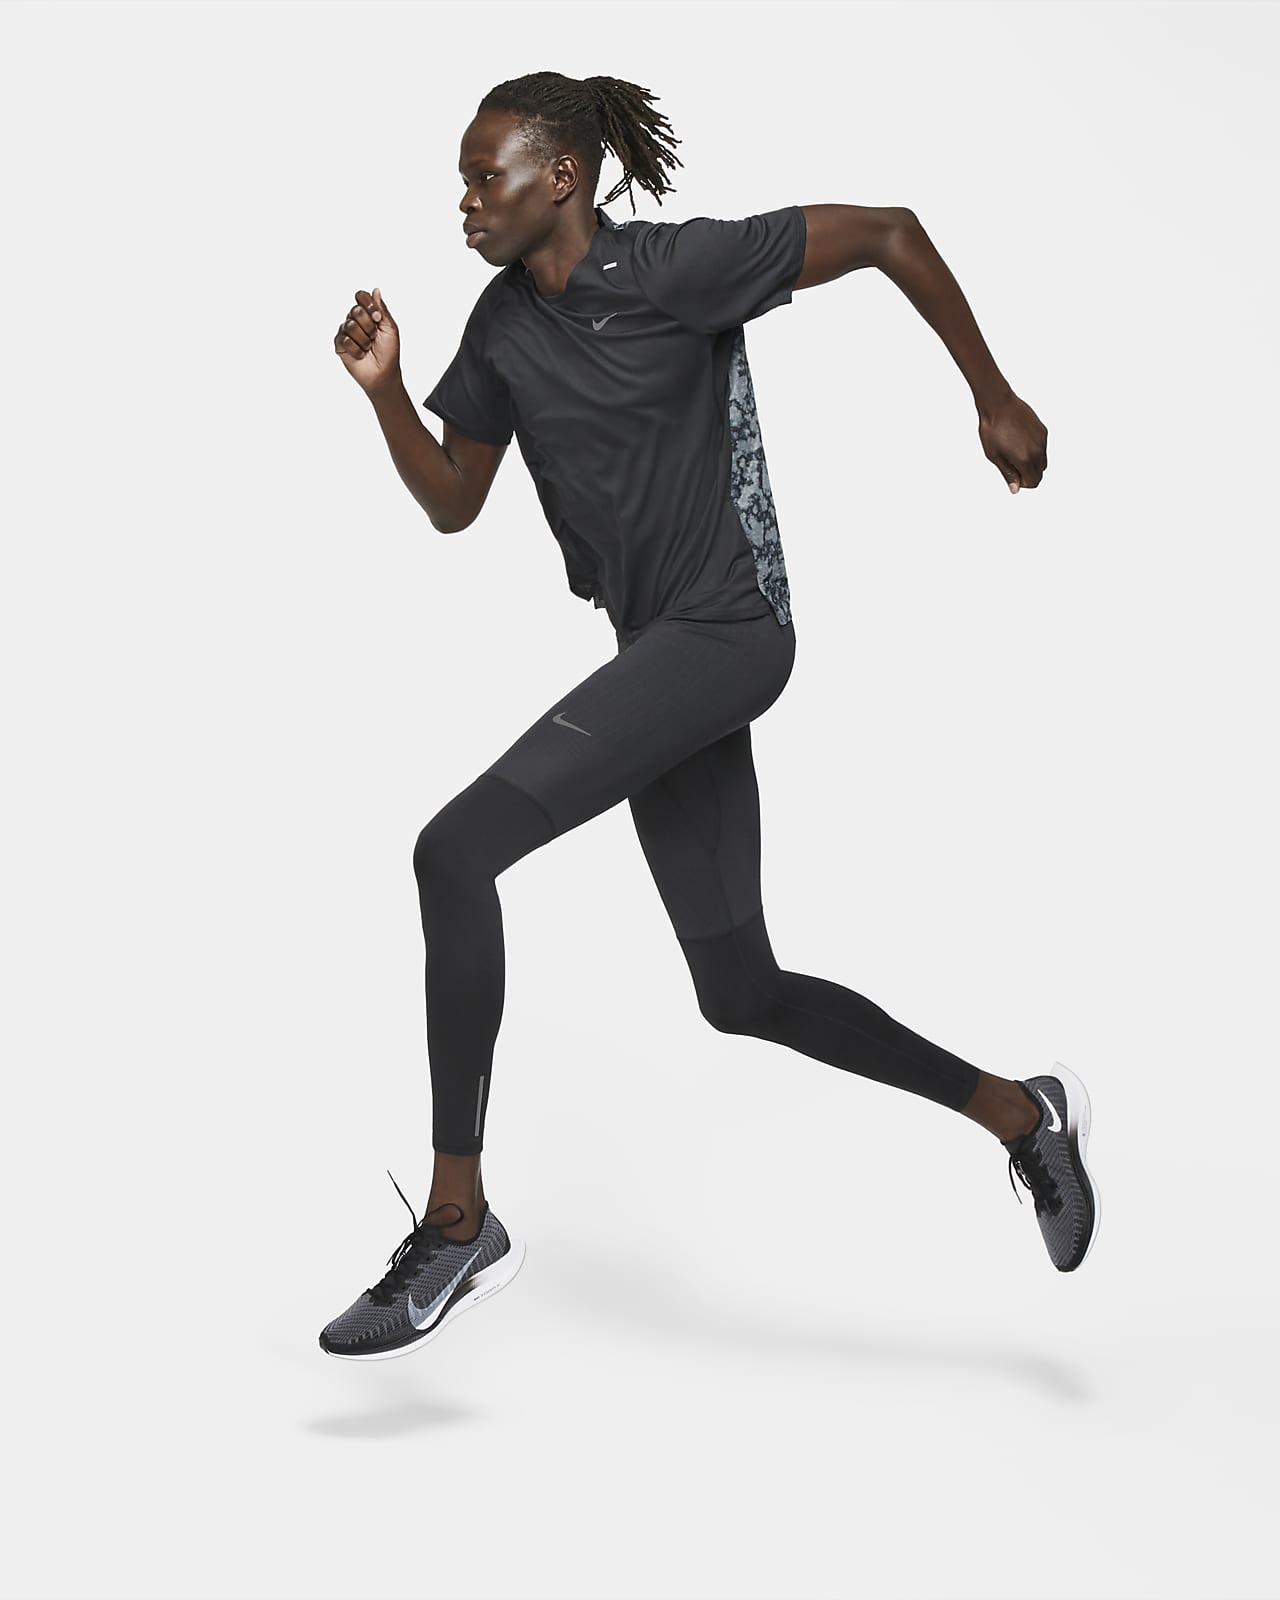 Nike Hyperwarm Tights Size L - $13 (89% Off Retail) - From Kristin